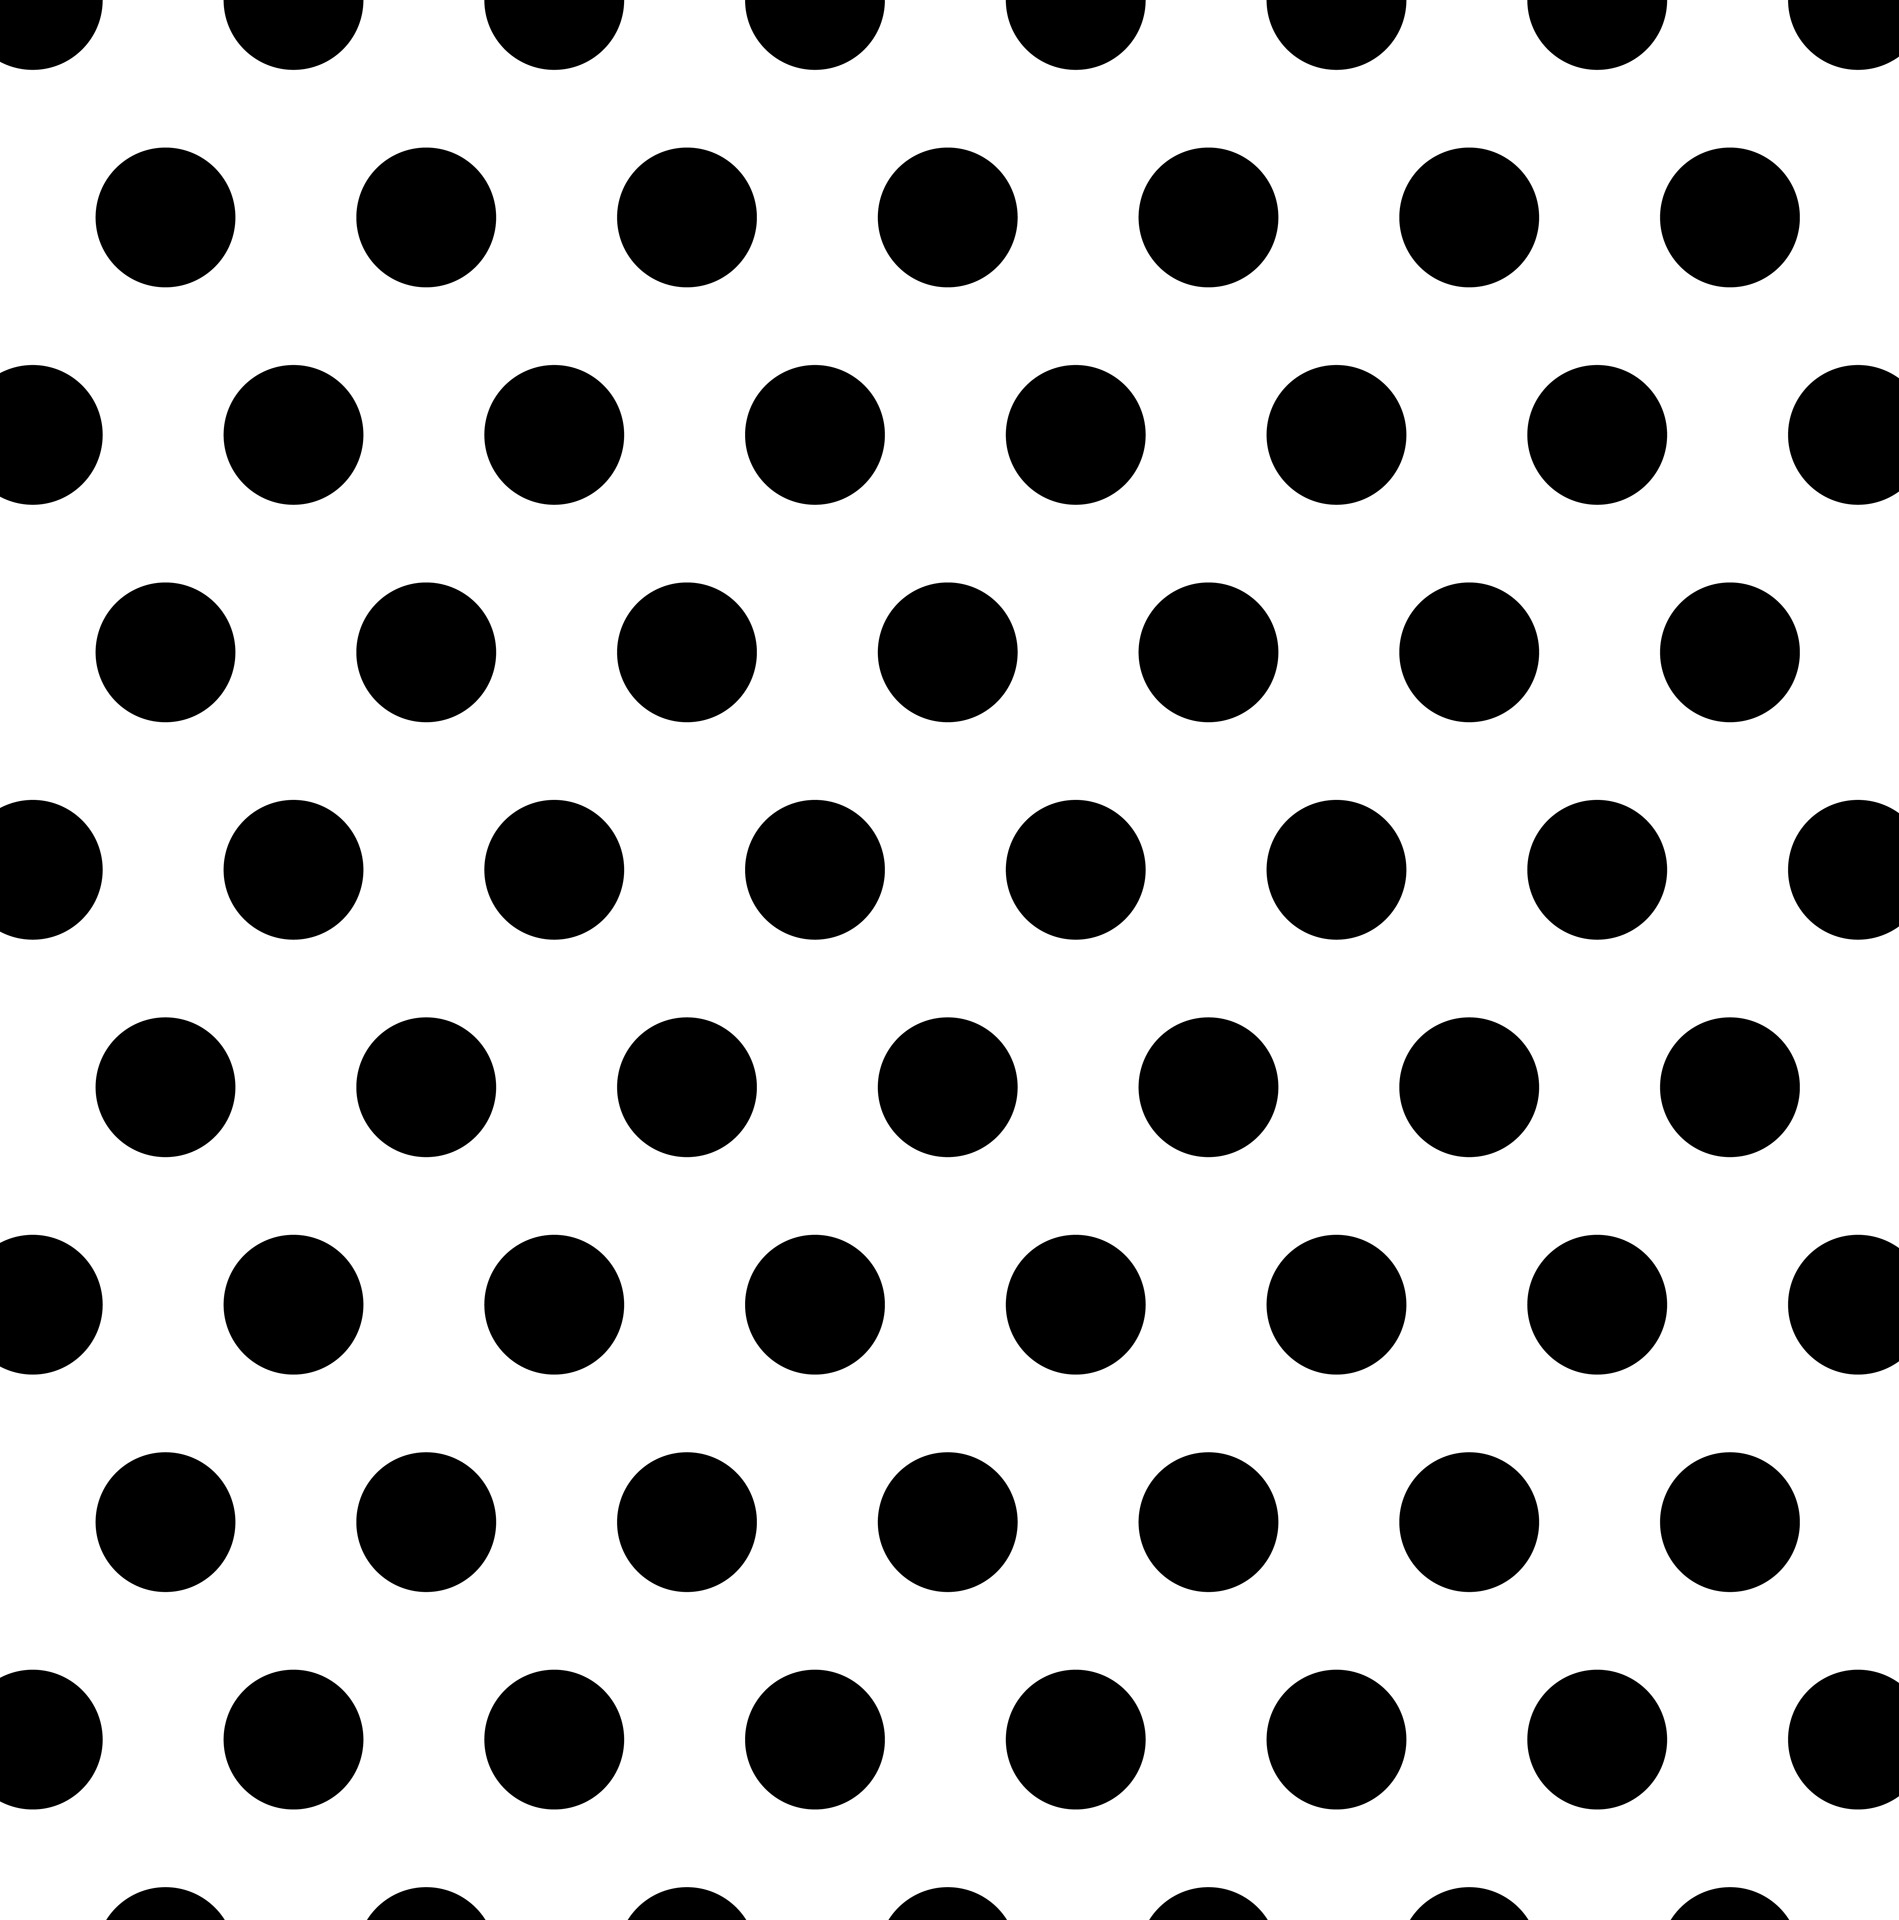 Black polka dots pattern background for scrapbooking